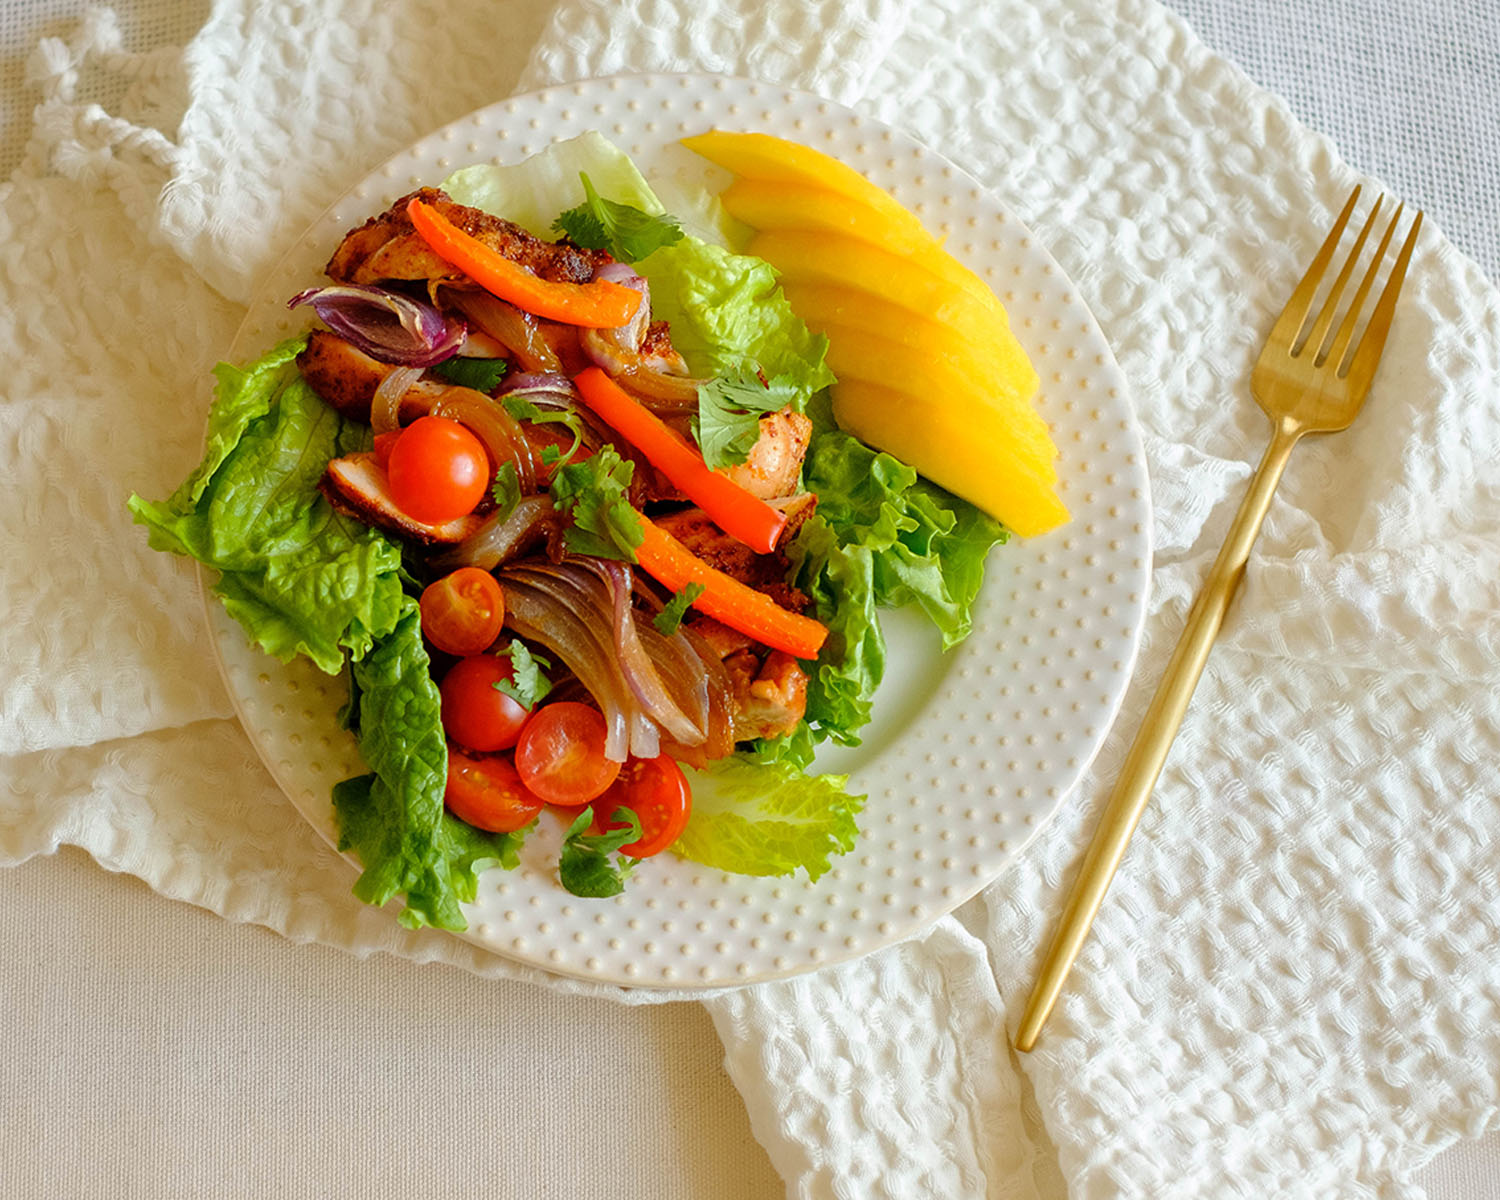 round plate with chicken fajita lettuce wrap and sliced mango